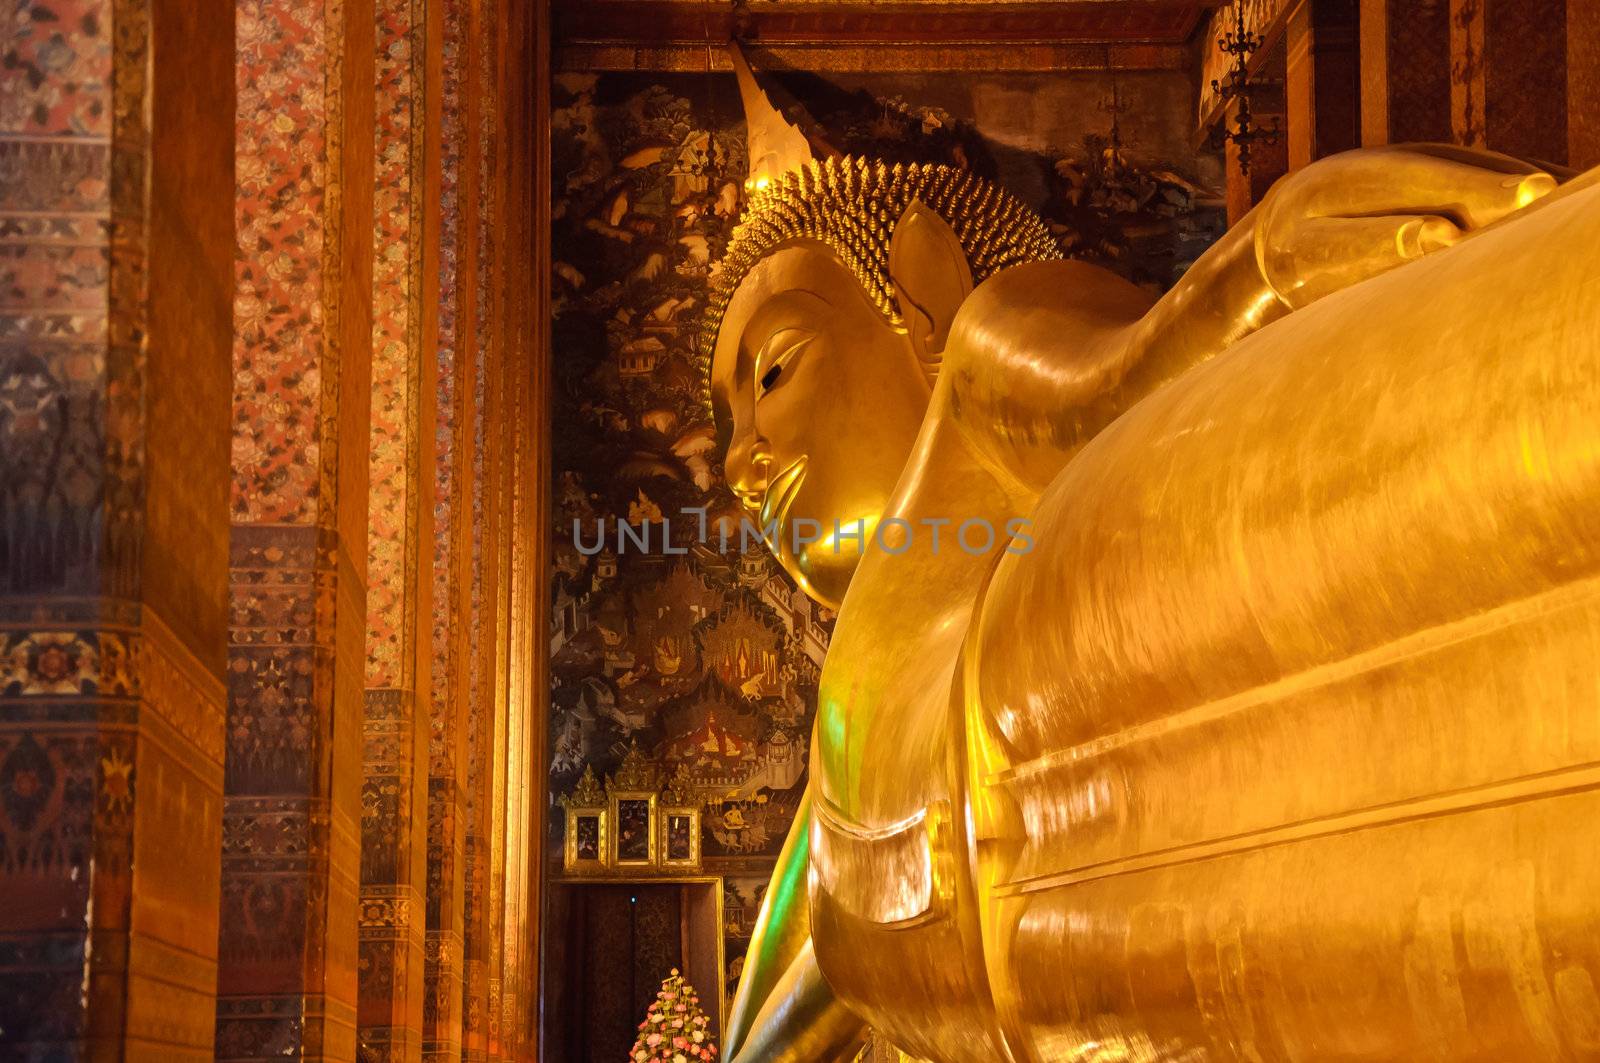 Reclining buddha statue at Wat Pho temple public place, Bangkok, Thailand